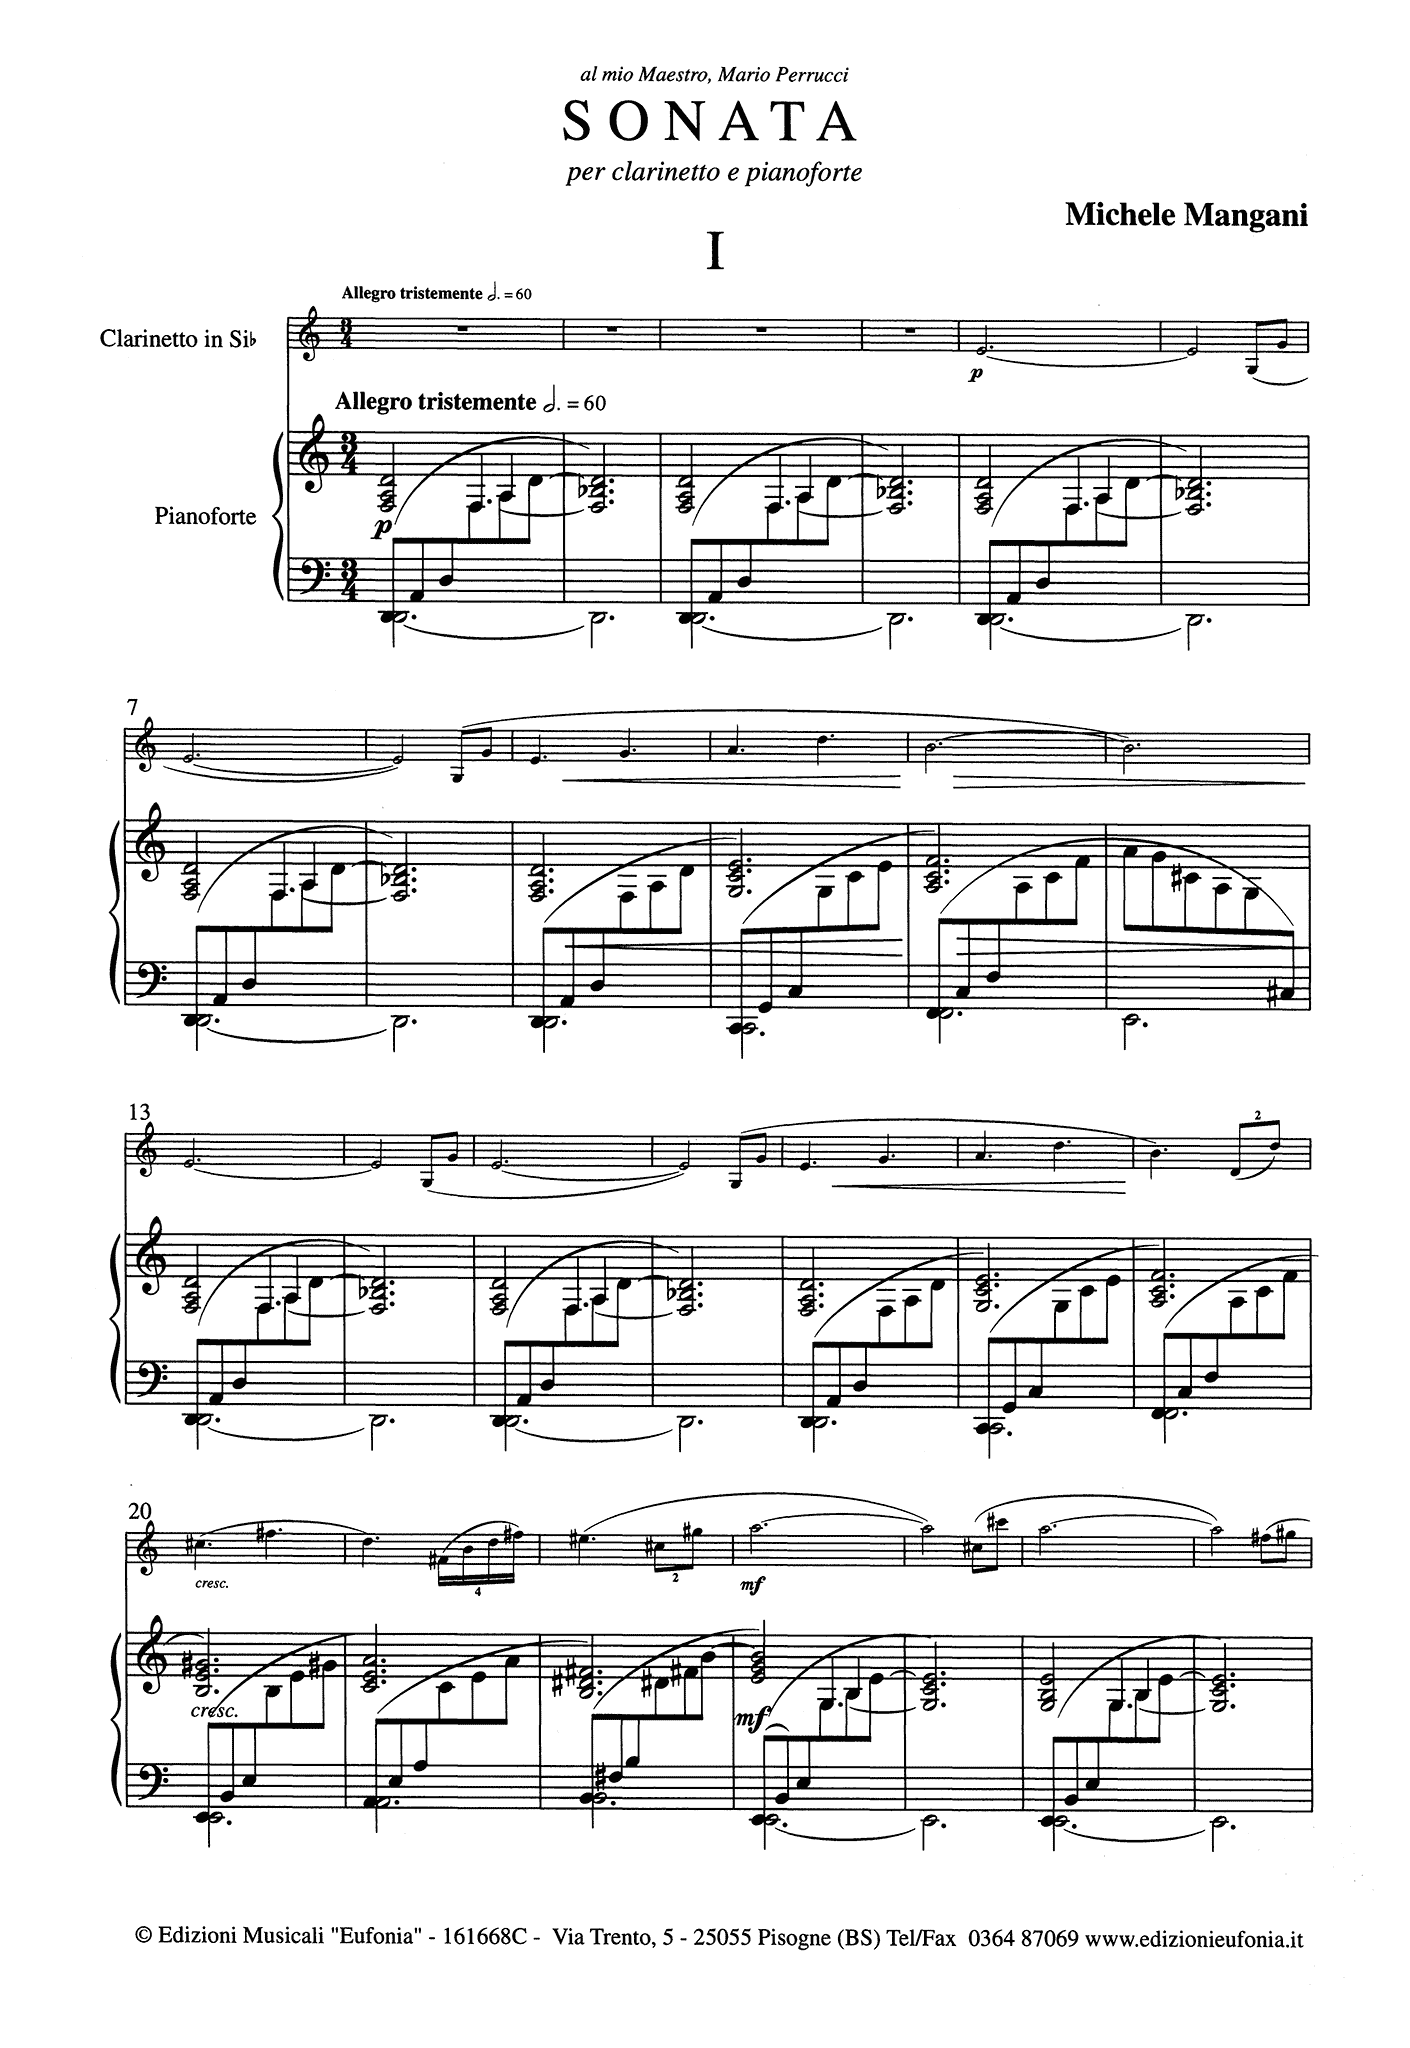 Mangani Sonata for Clarinet & Piano - Movement 1